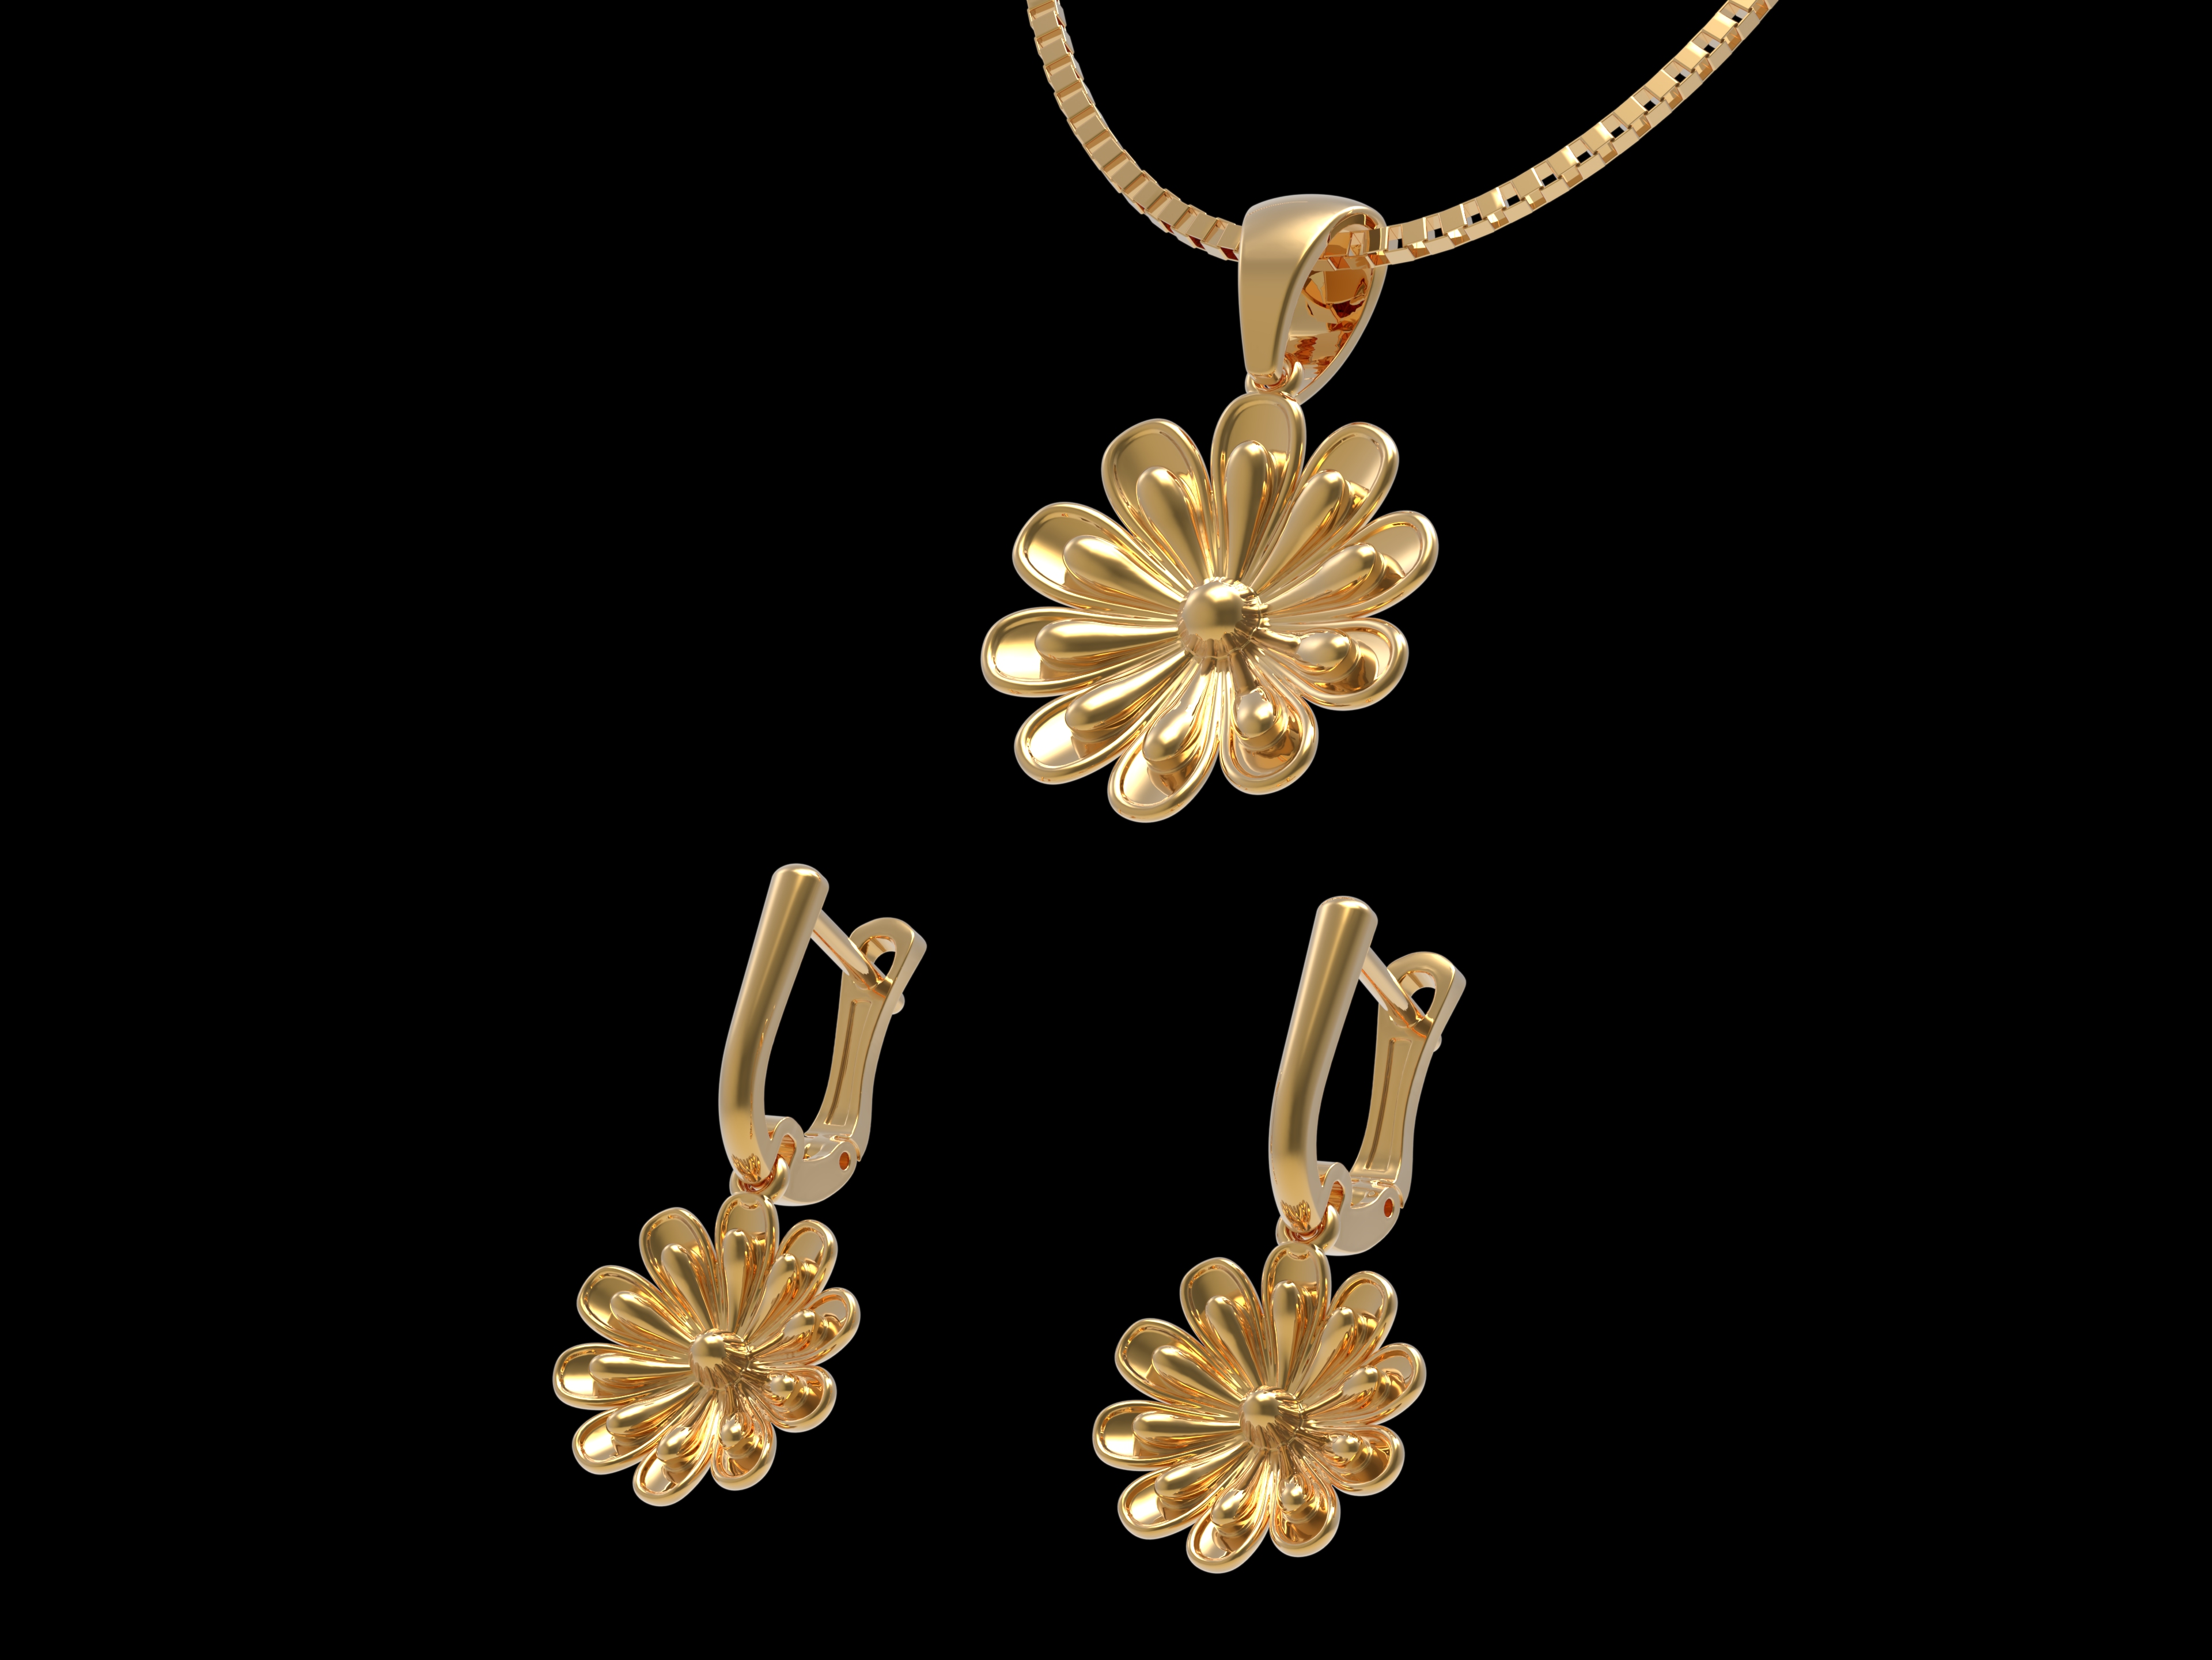 Flower pendant with earrings